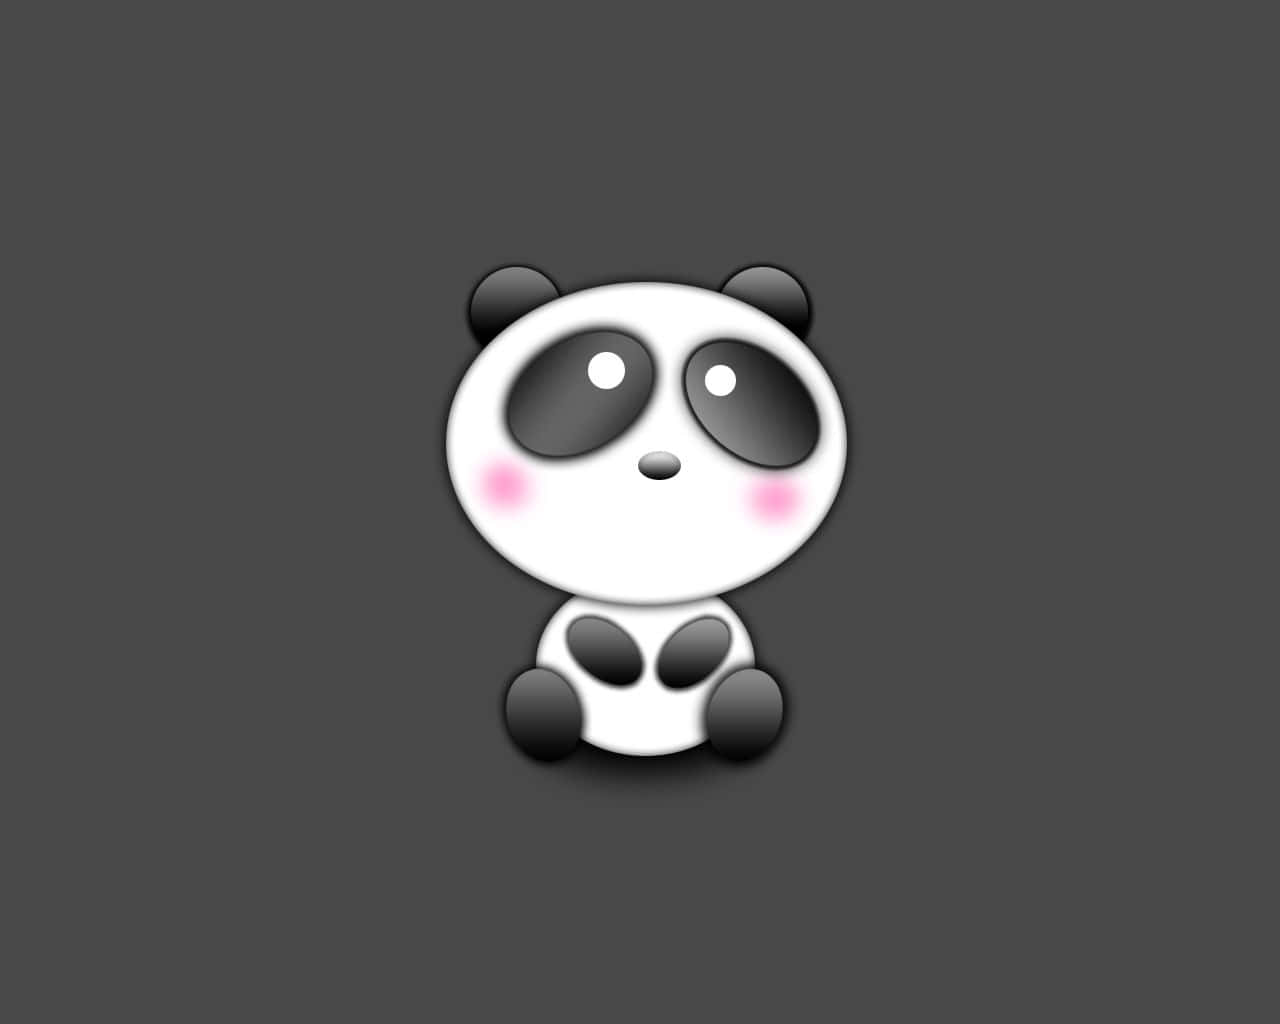 "A peaceful panda sitting in an idyllic bamboo forest."